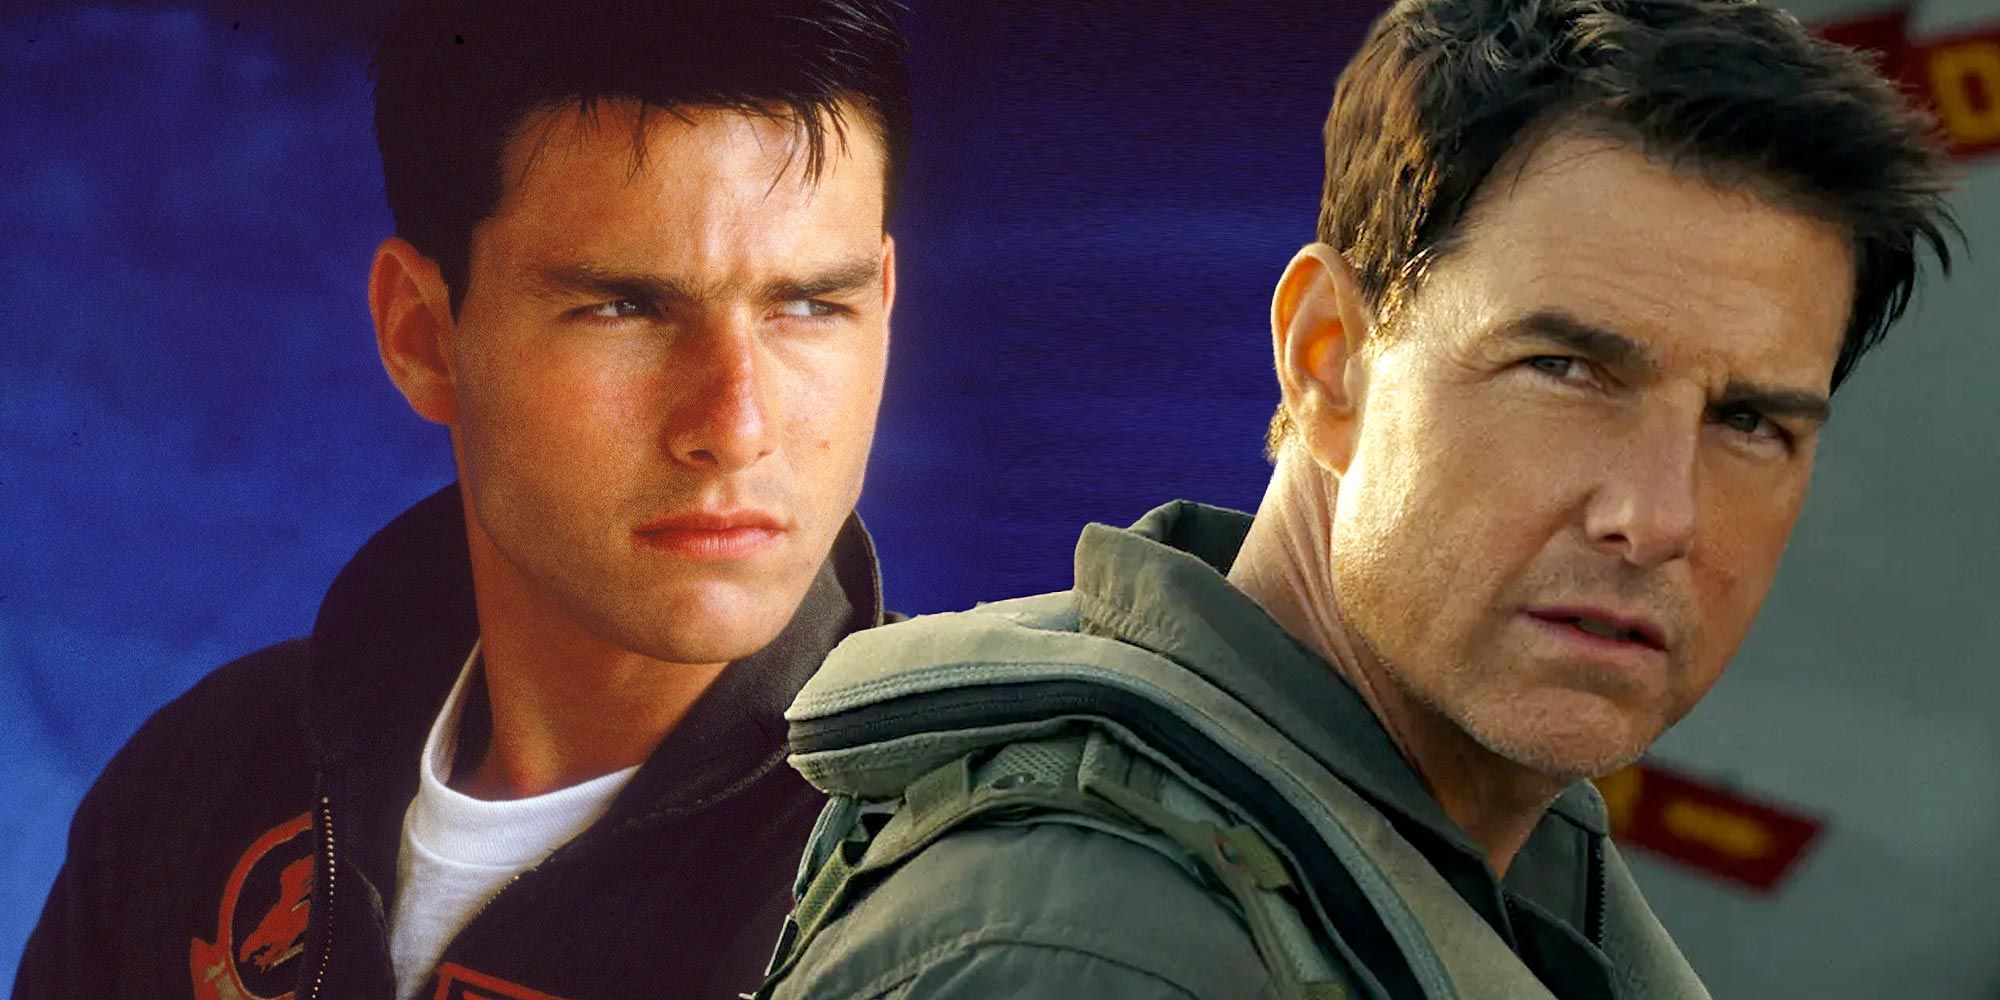 Tom Cruise in Top Gun and Top Gun: Maverick